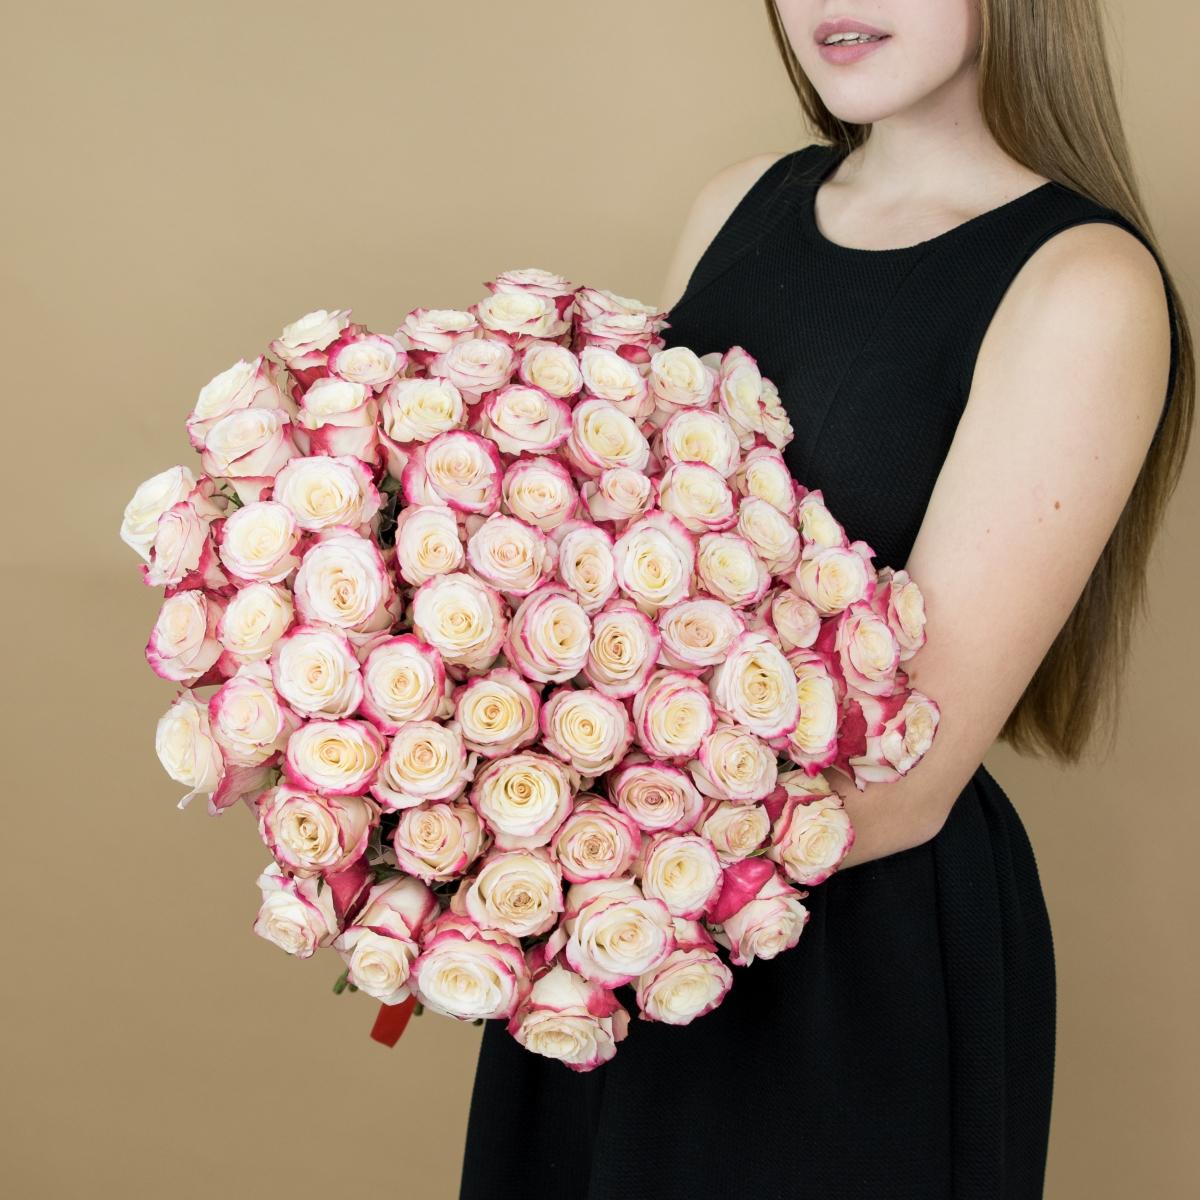 Розы красно-белые (40 см) Эквадор артикул букета  519